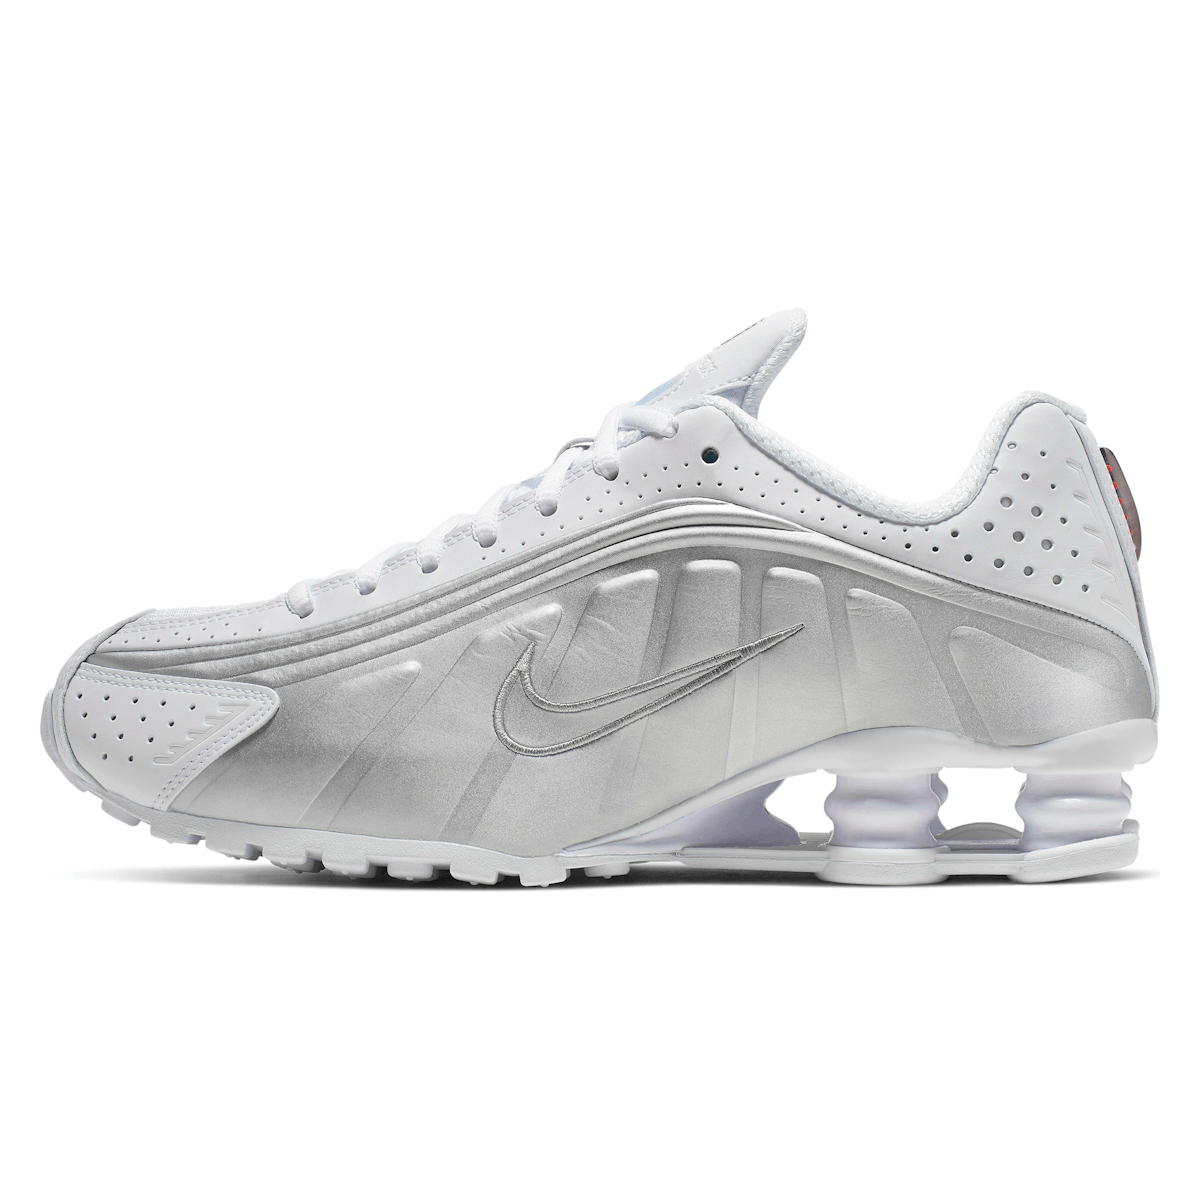 Nike Shox R4 "White Metallic Silver"